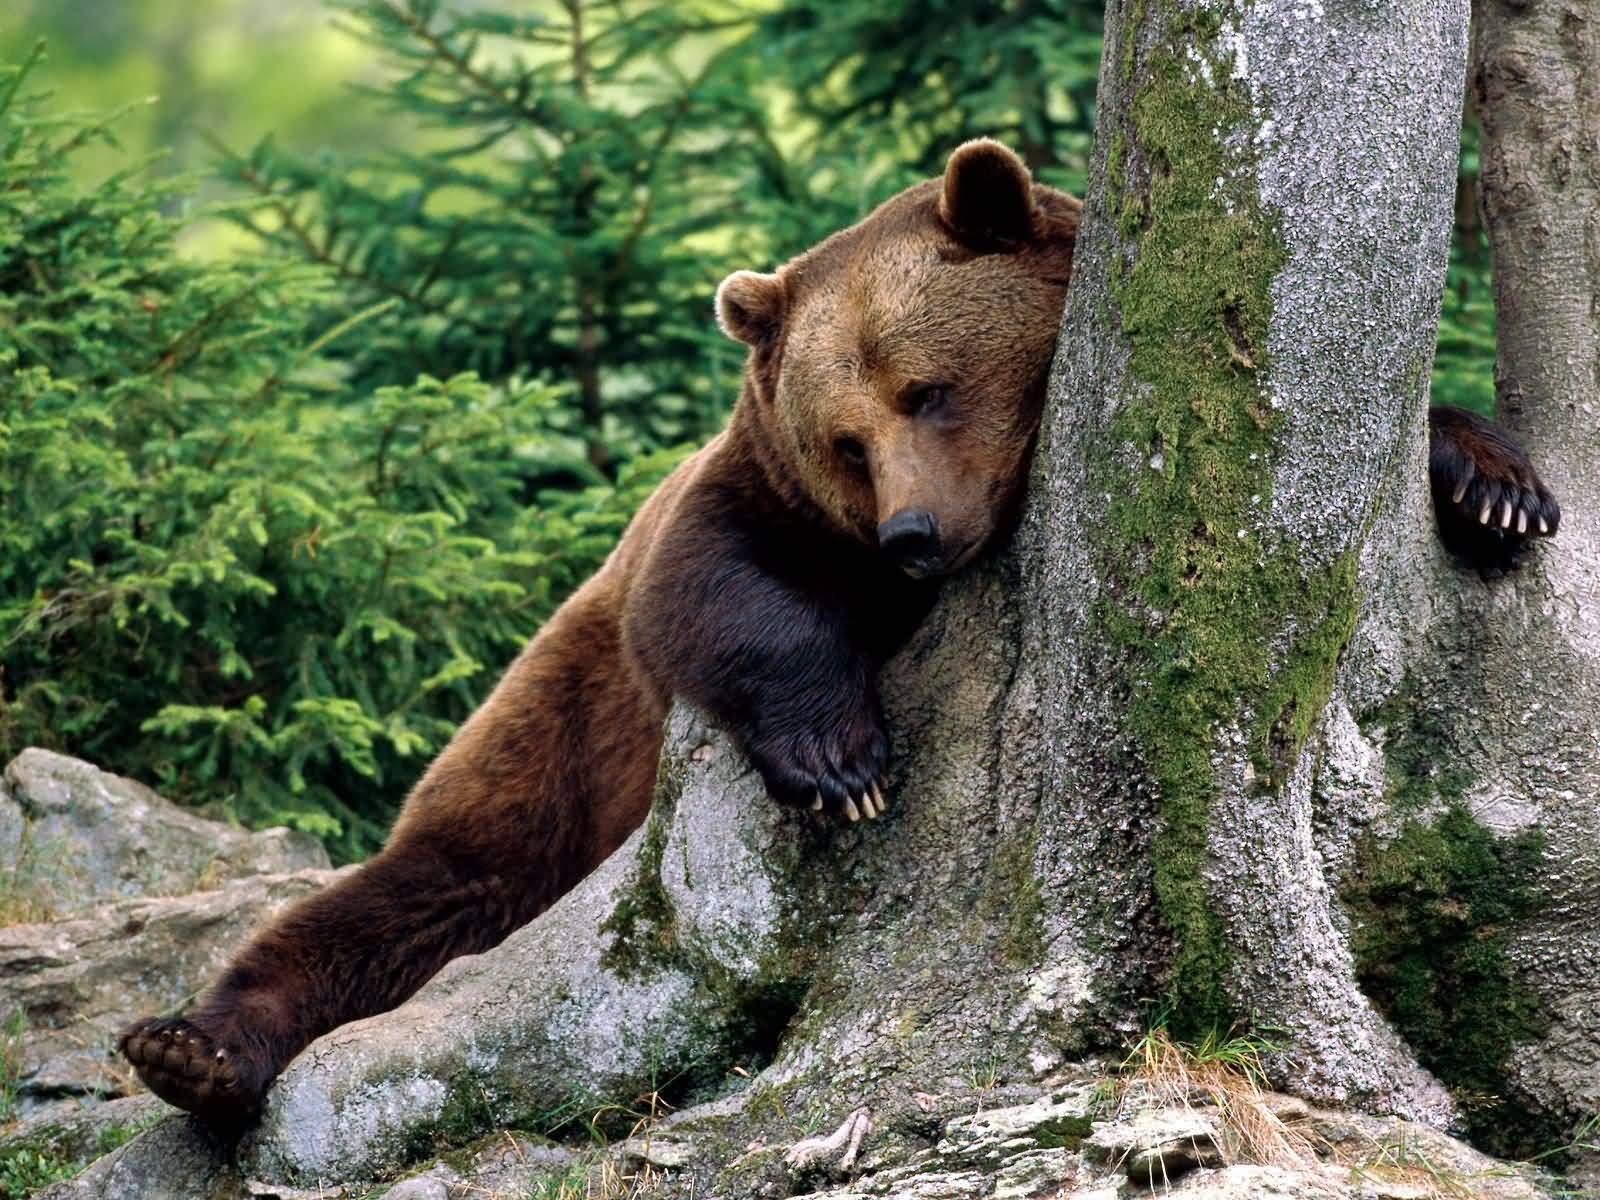 Pin by Julie Glenn on Fluffiness | Pinterest | Brown bear, Wild ...